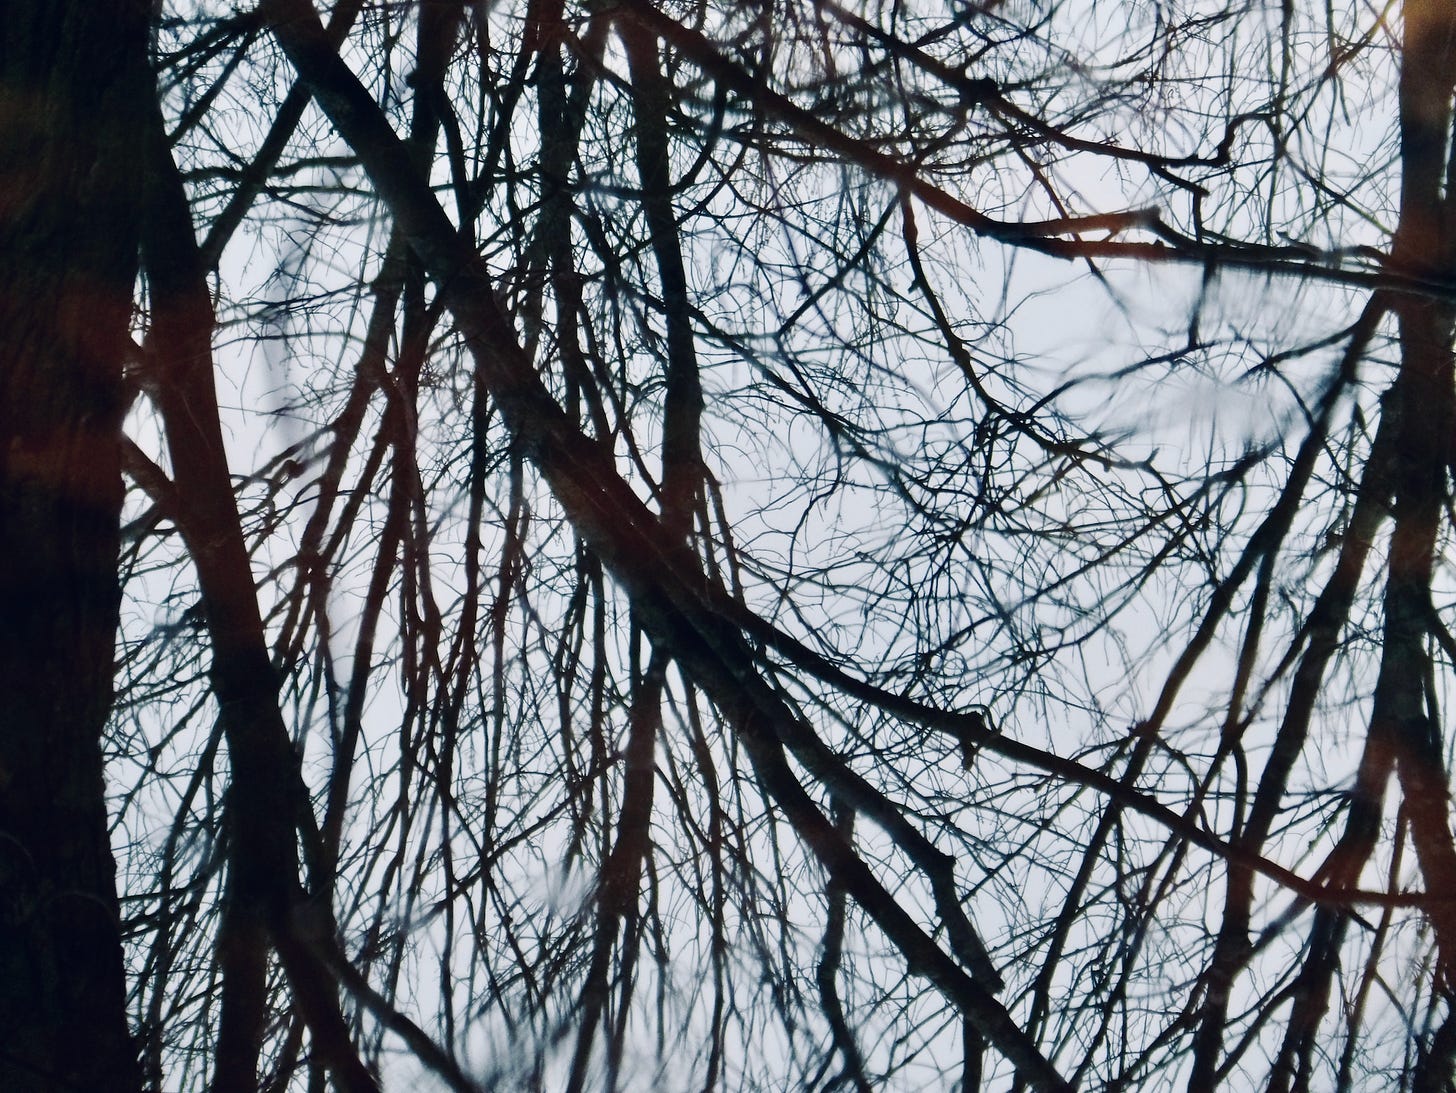 barren trees reflecting in water